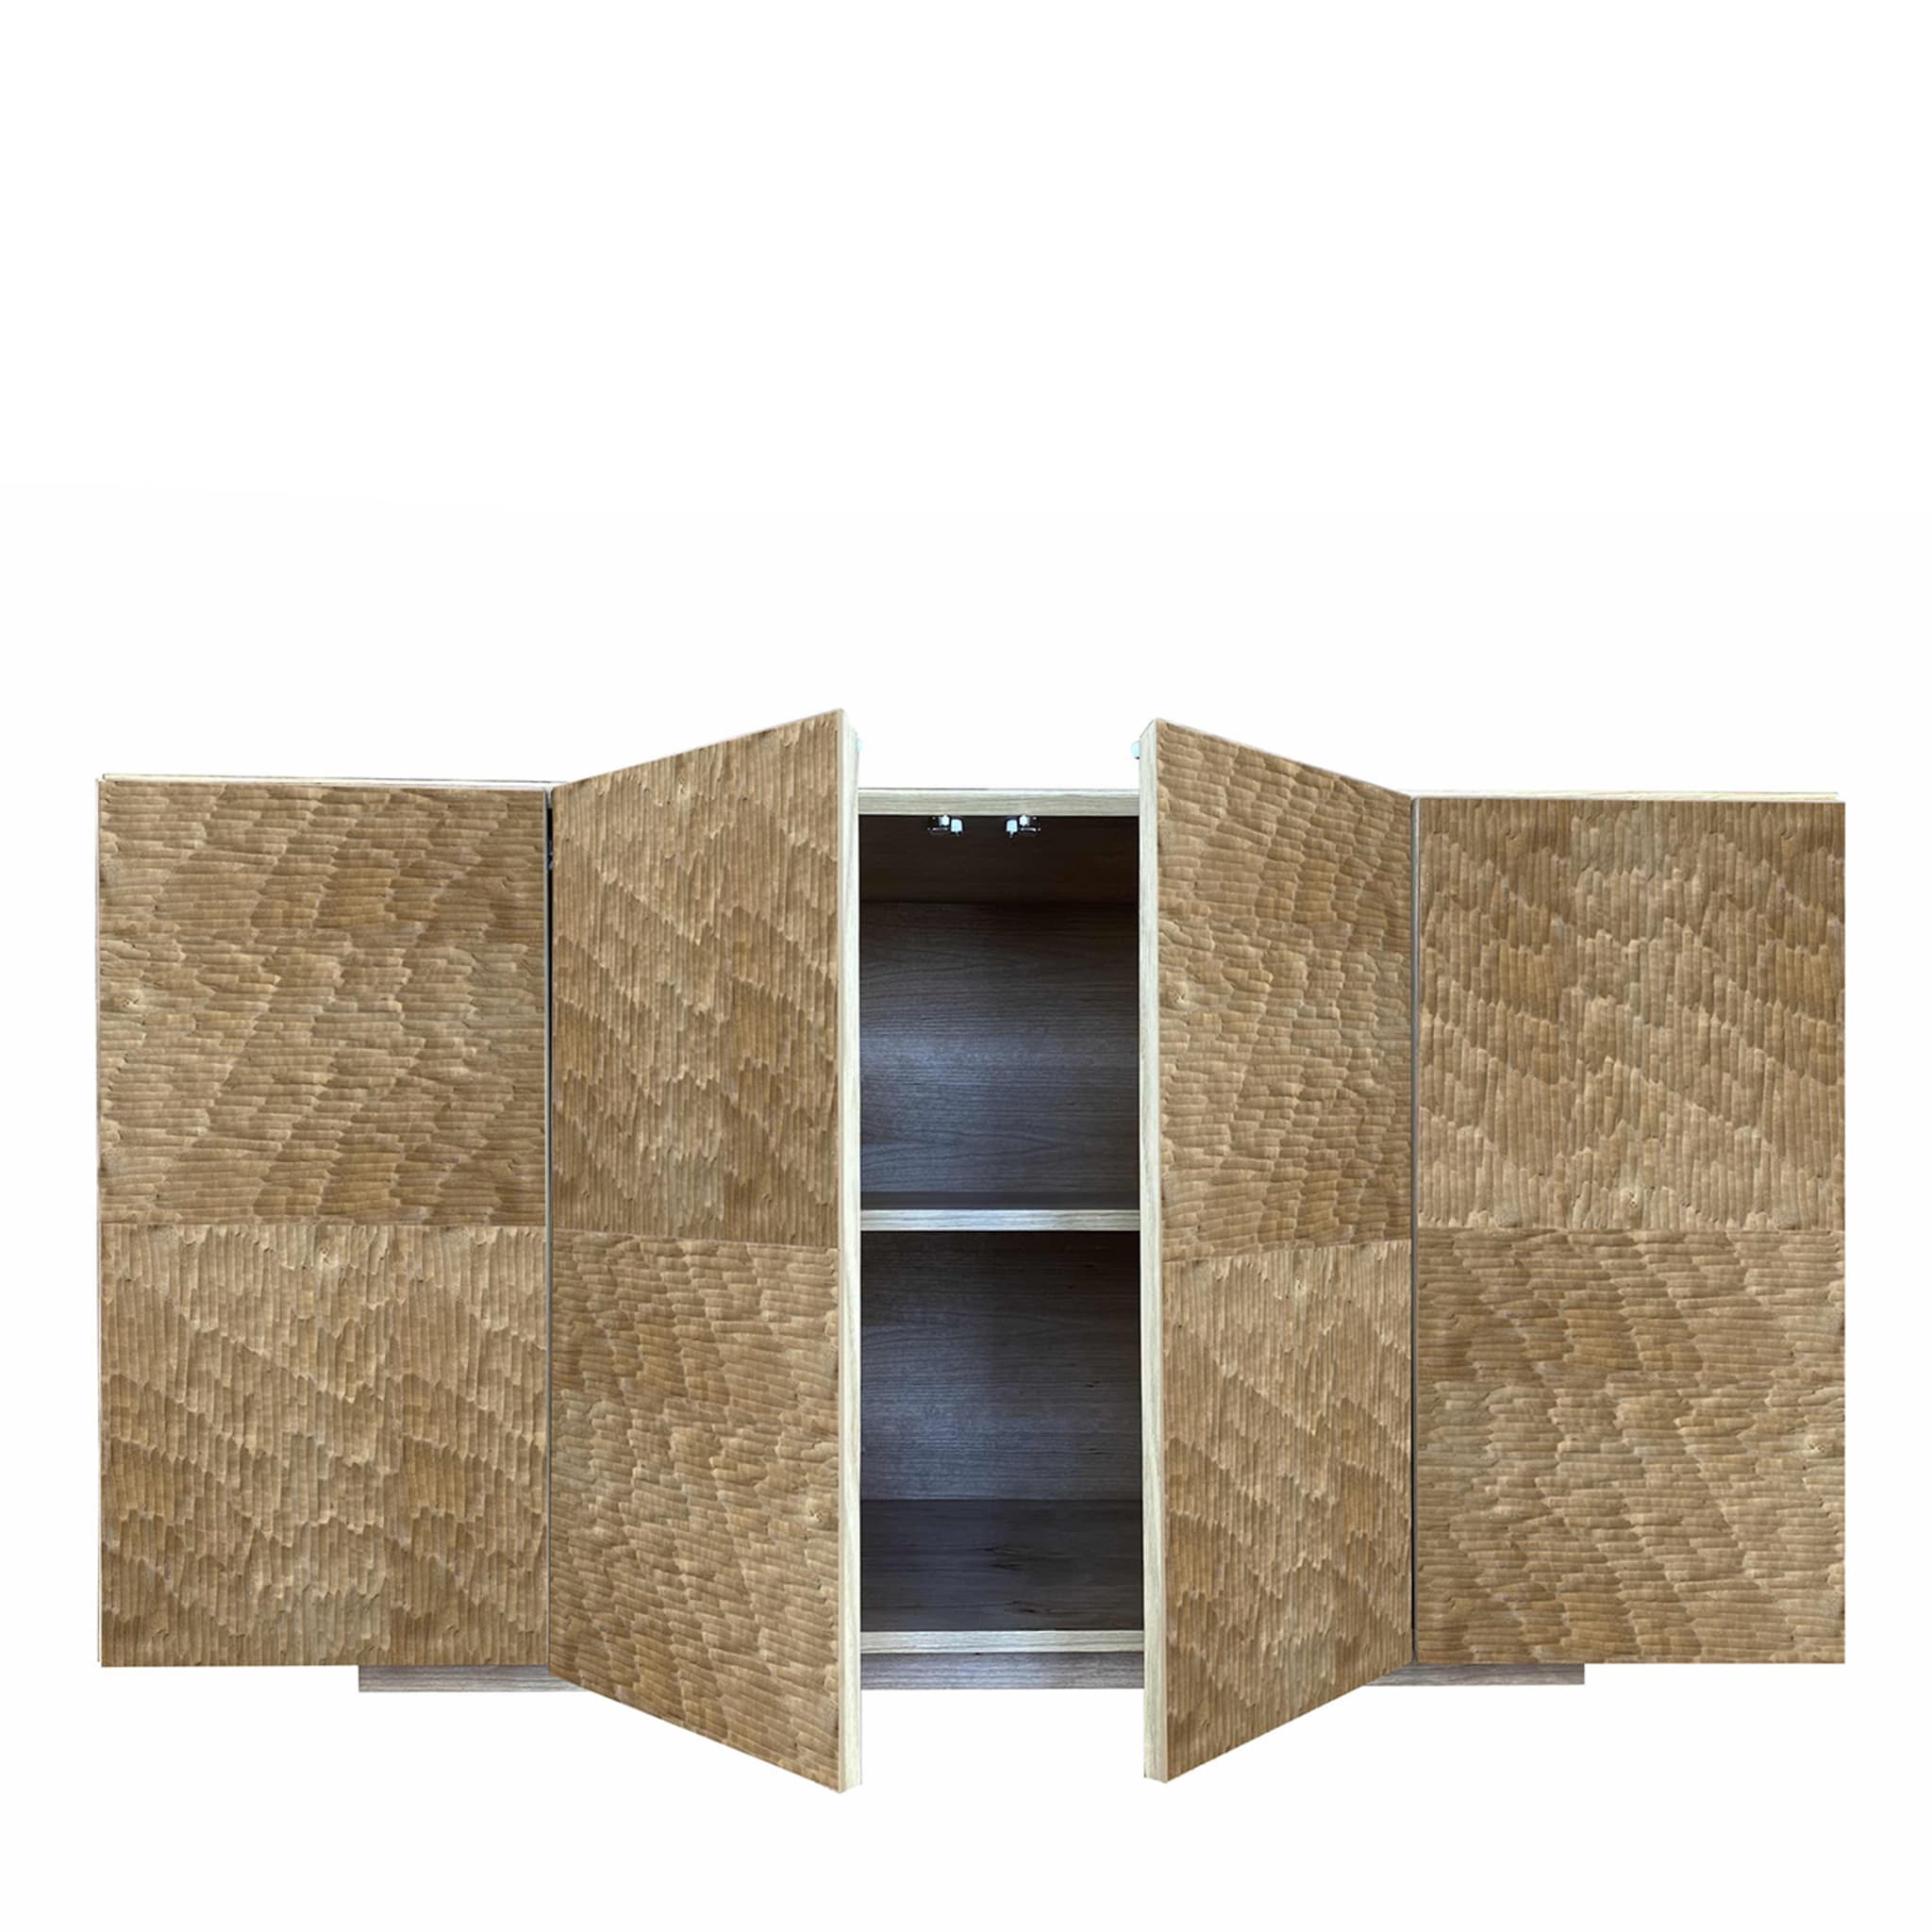 Boccadarno Sette 4-Door Carved Sideboard by Meccani Studio - Alternative view 5